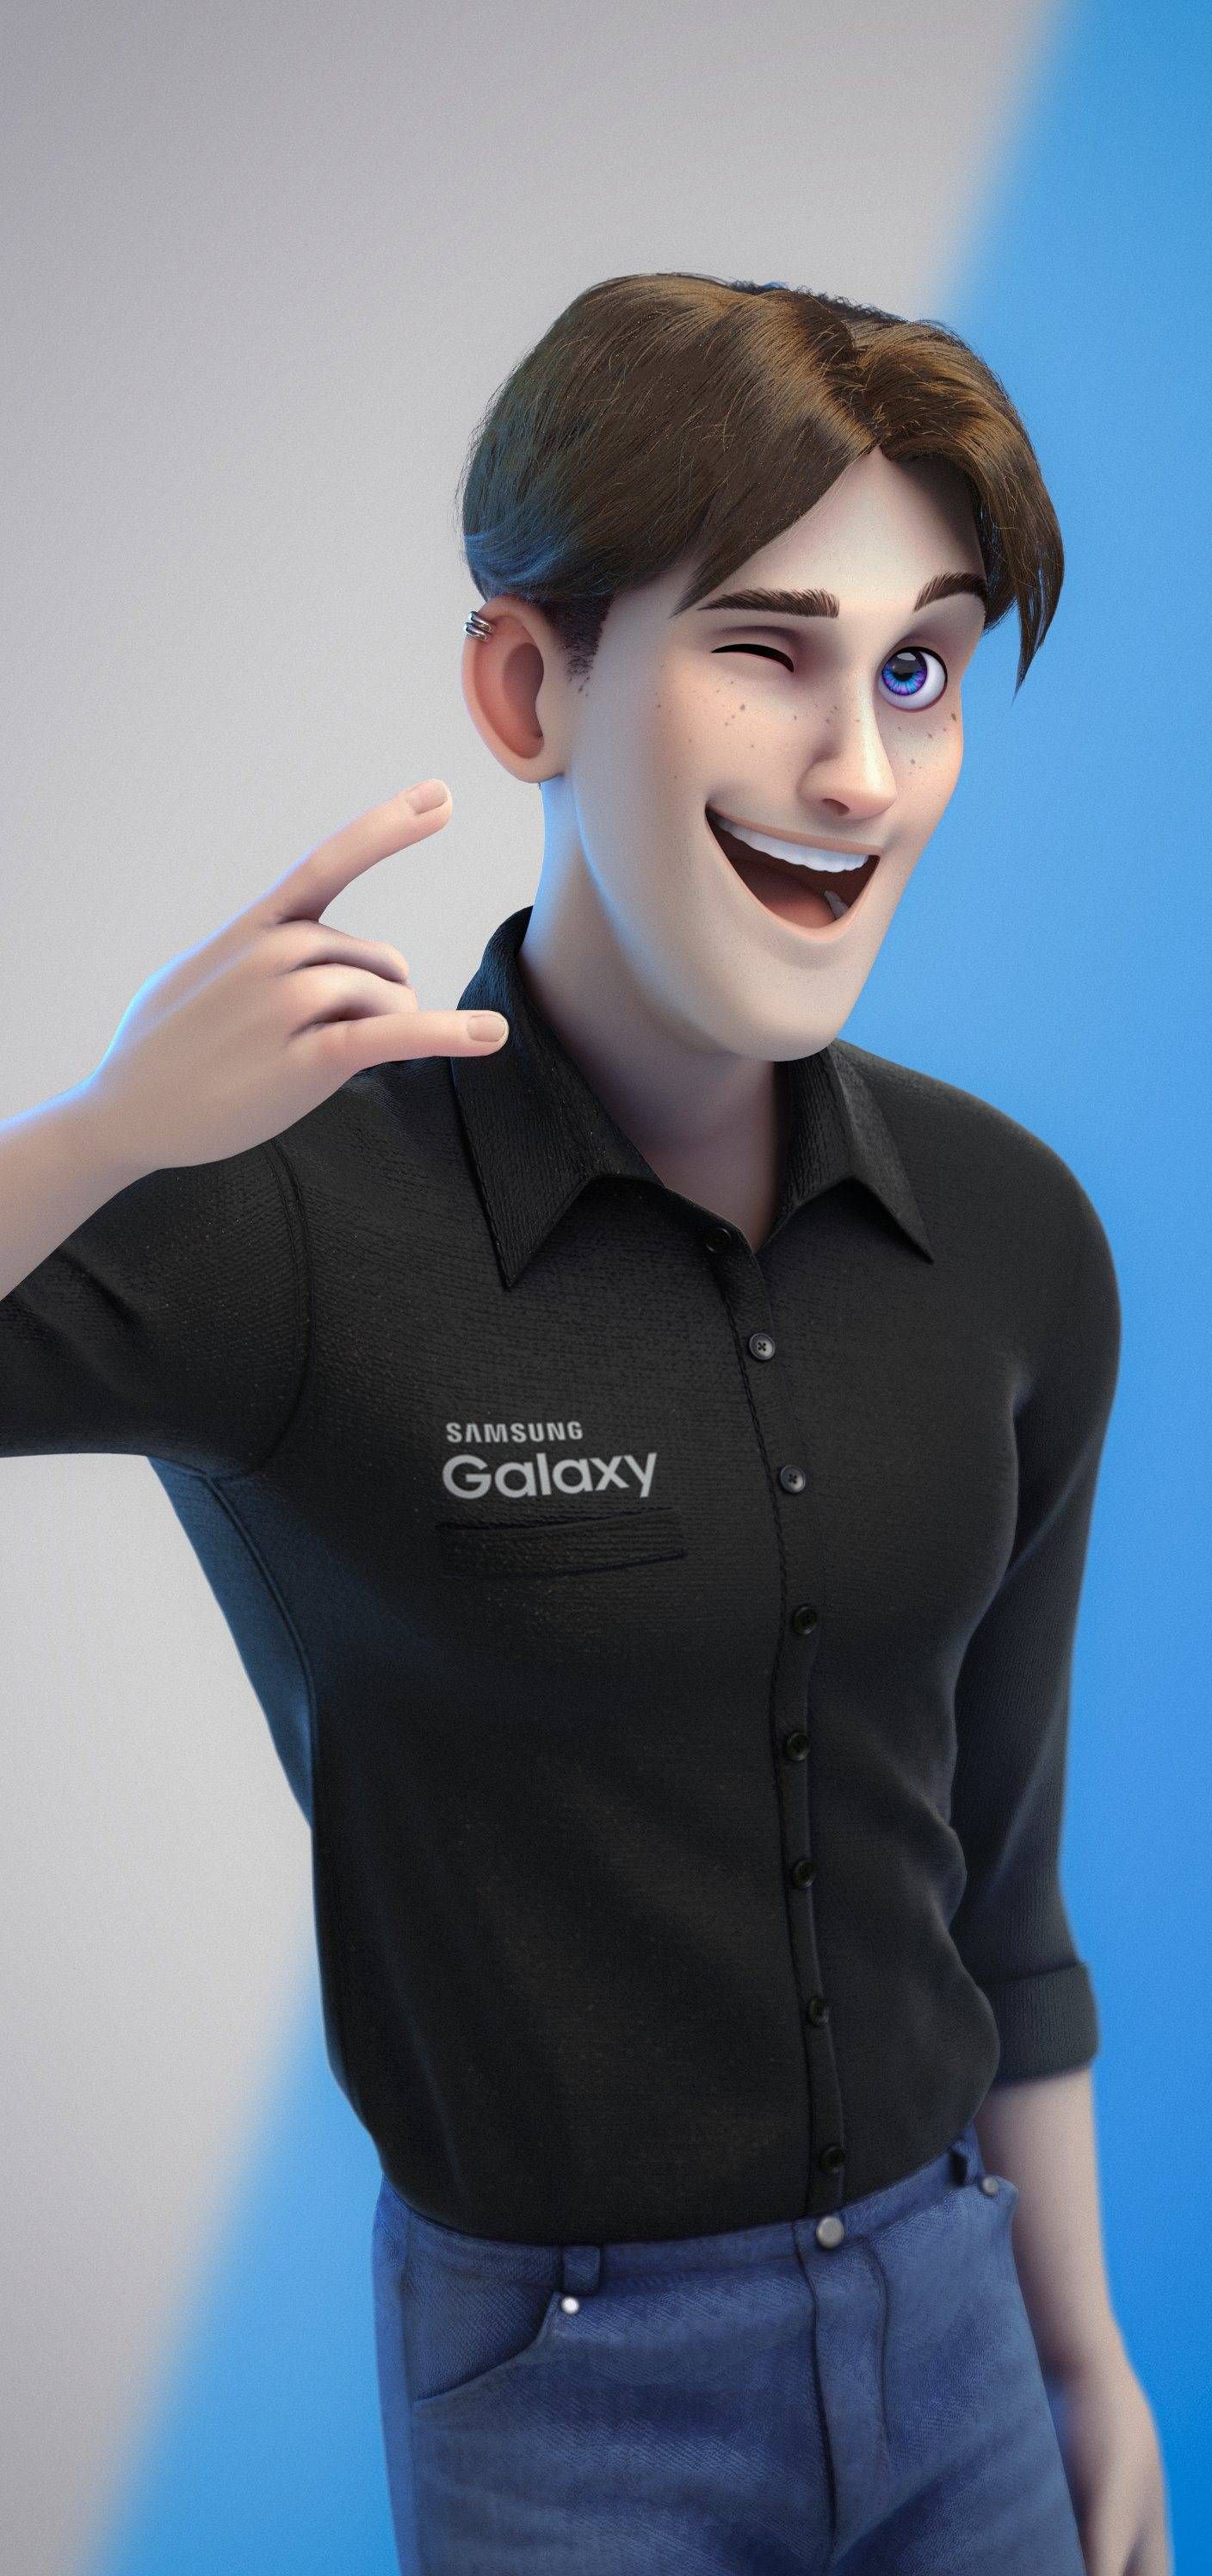 Samsung Sam is Back?!! - Samsung Members